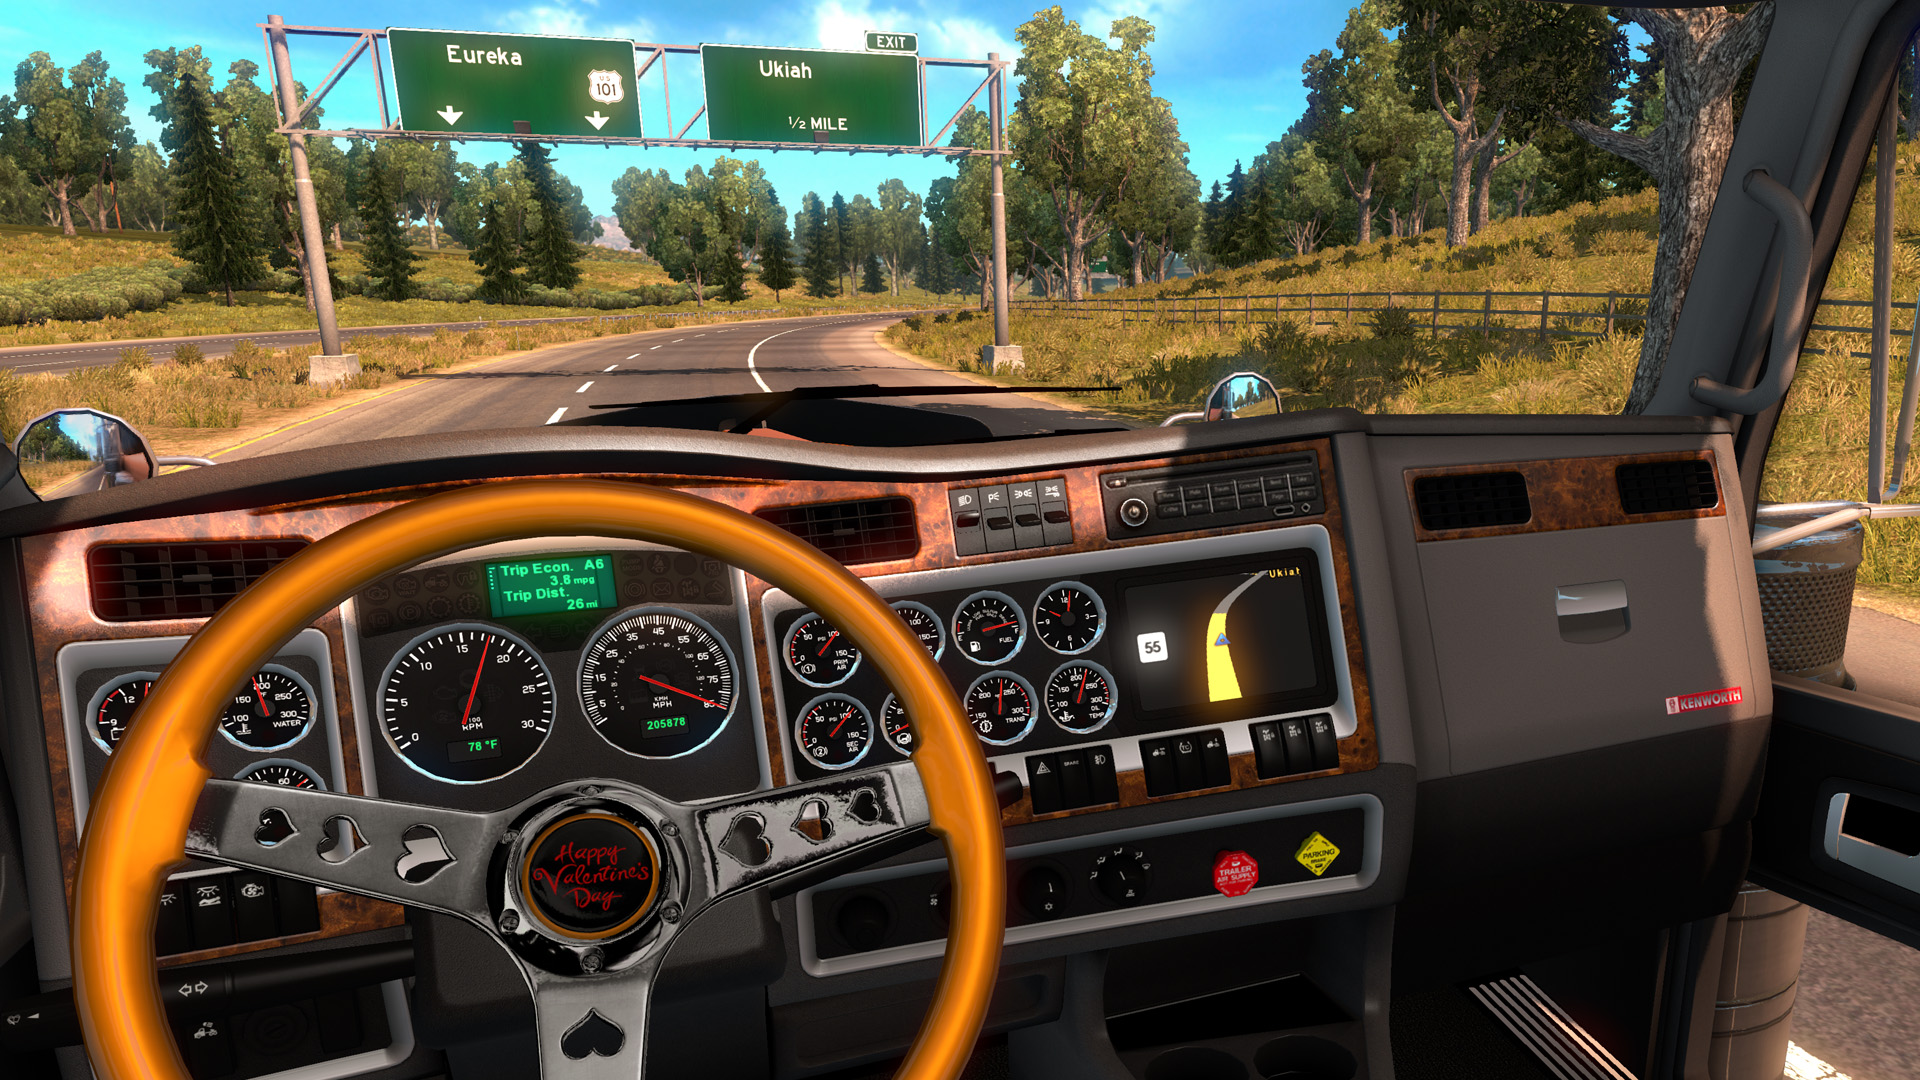 American truck simulator 2 free download for pc